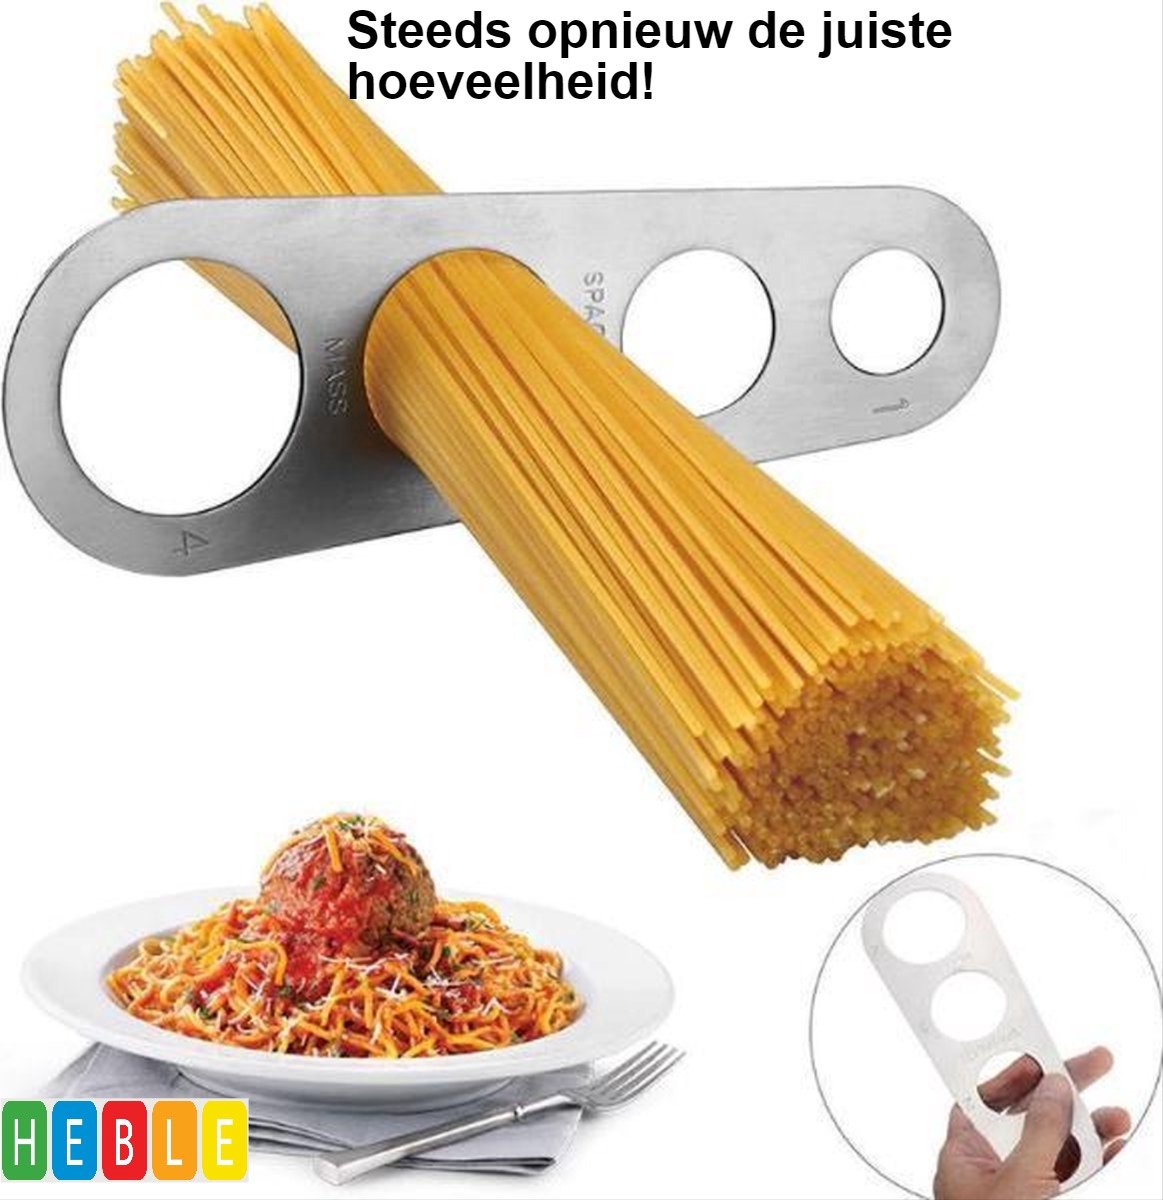 RVS Spaghetti-Portiemeter / Spaghettimeter - van Heble® - Heble®